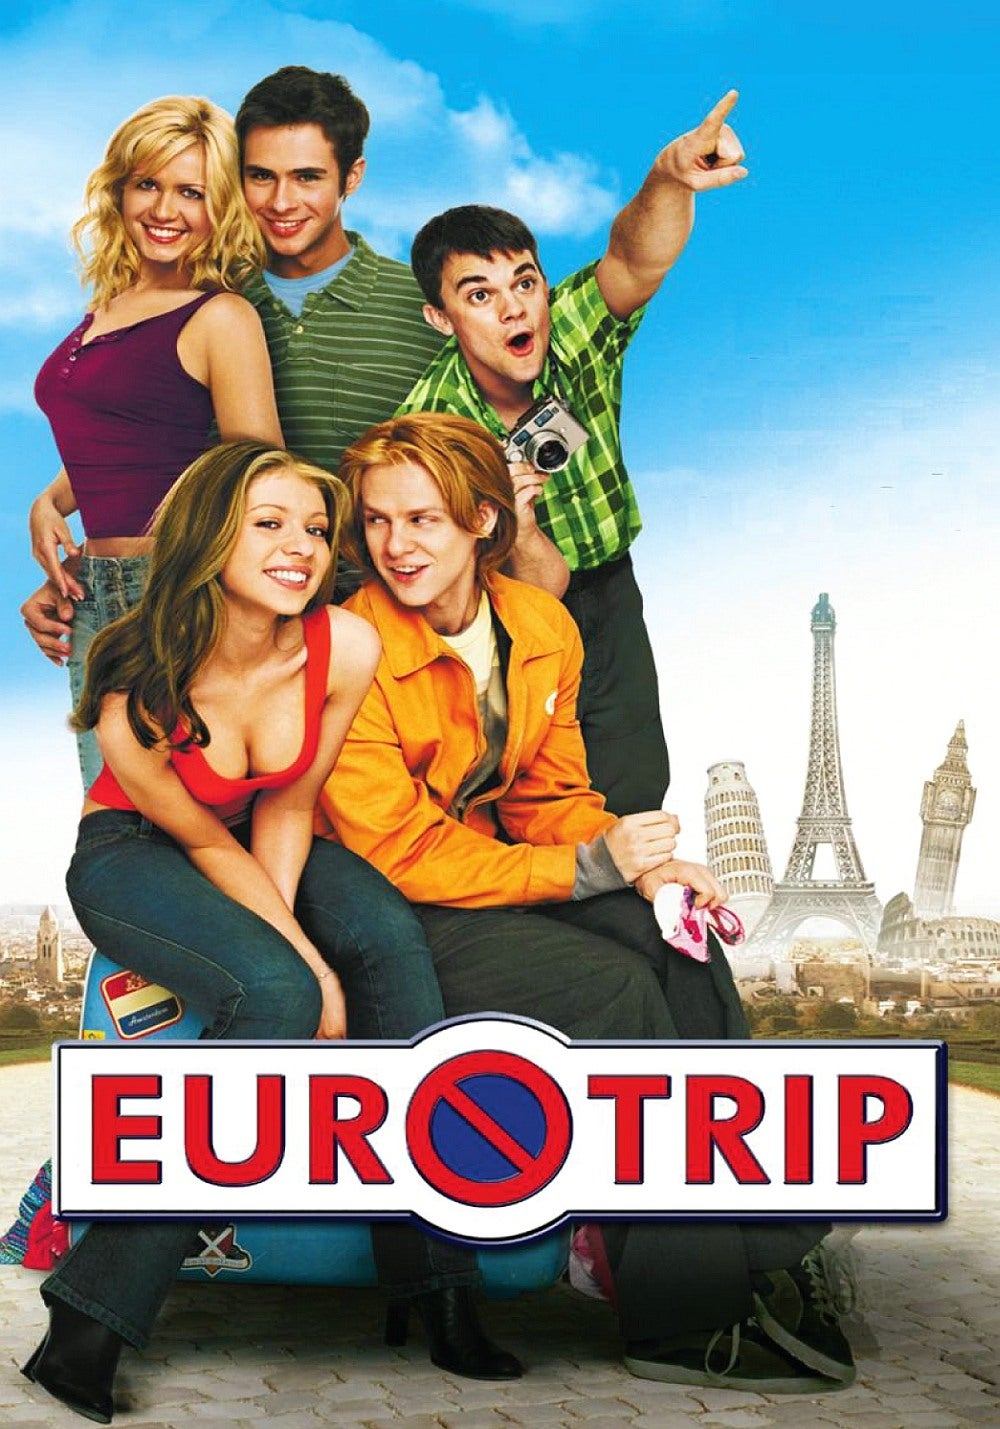 Best of Euro trip sex scenes